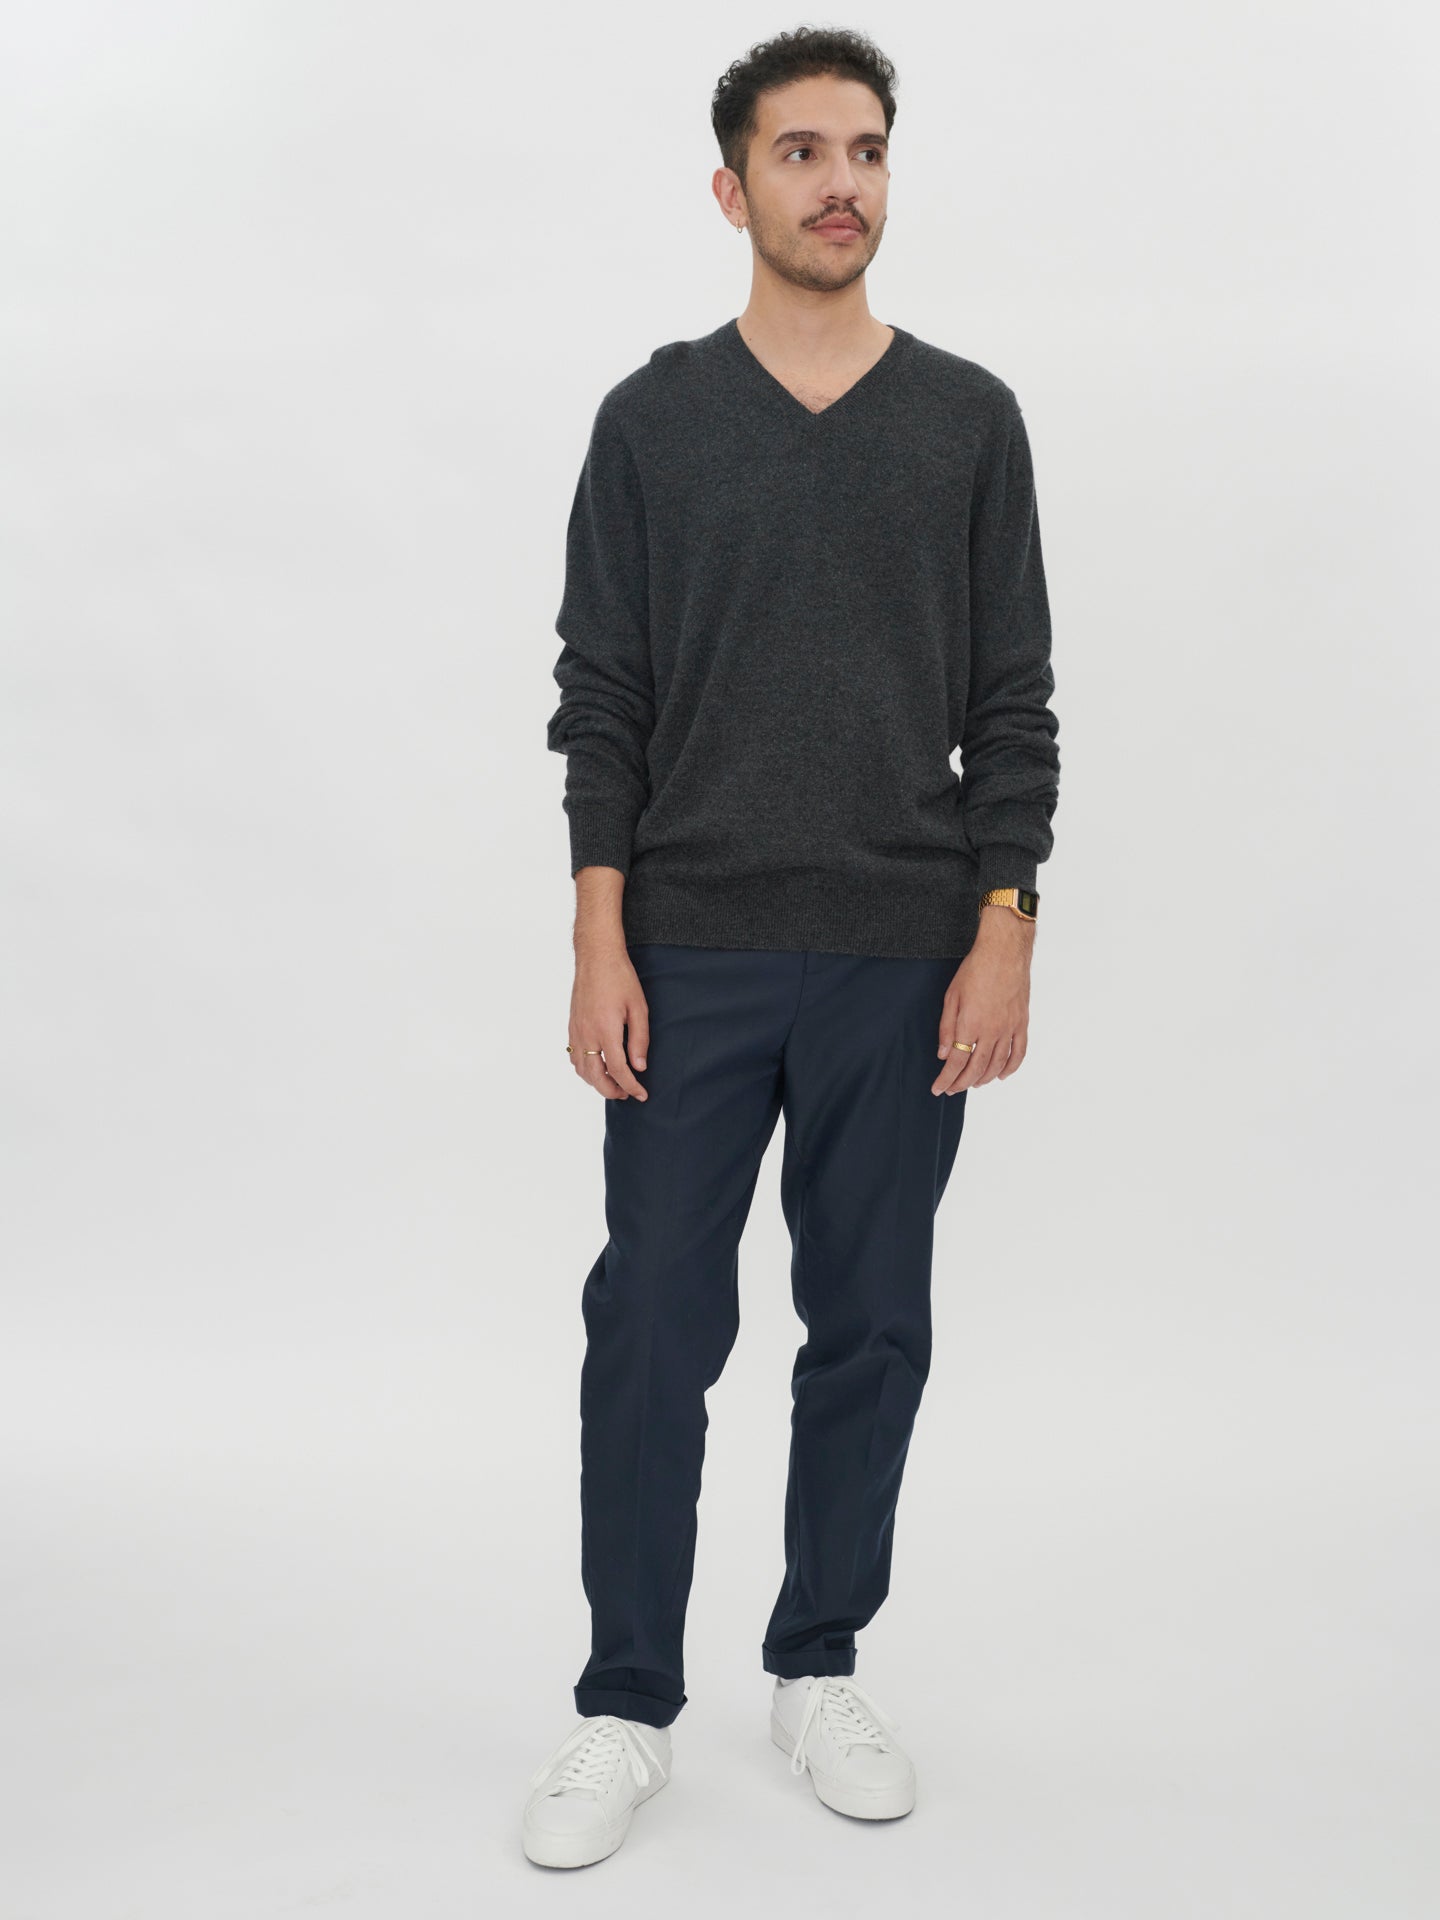 Men's Cashmere Basic V-Neck Sweater Charcoal - Gobi Cashmere